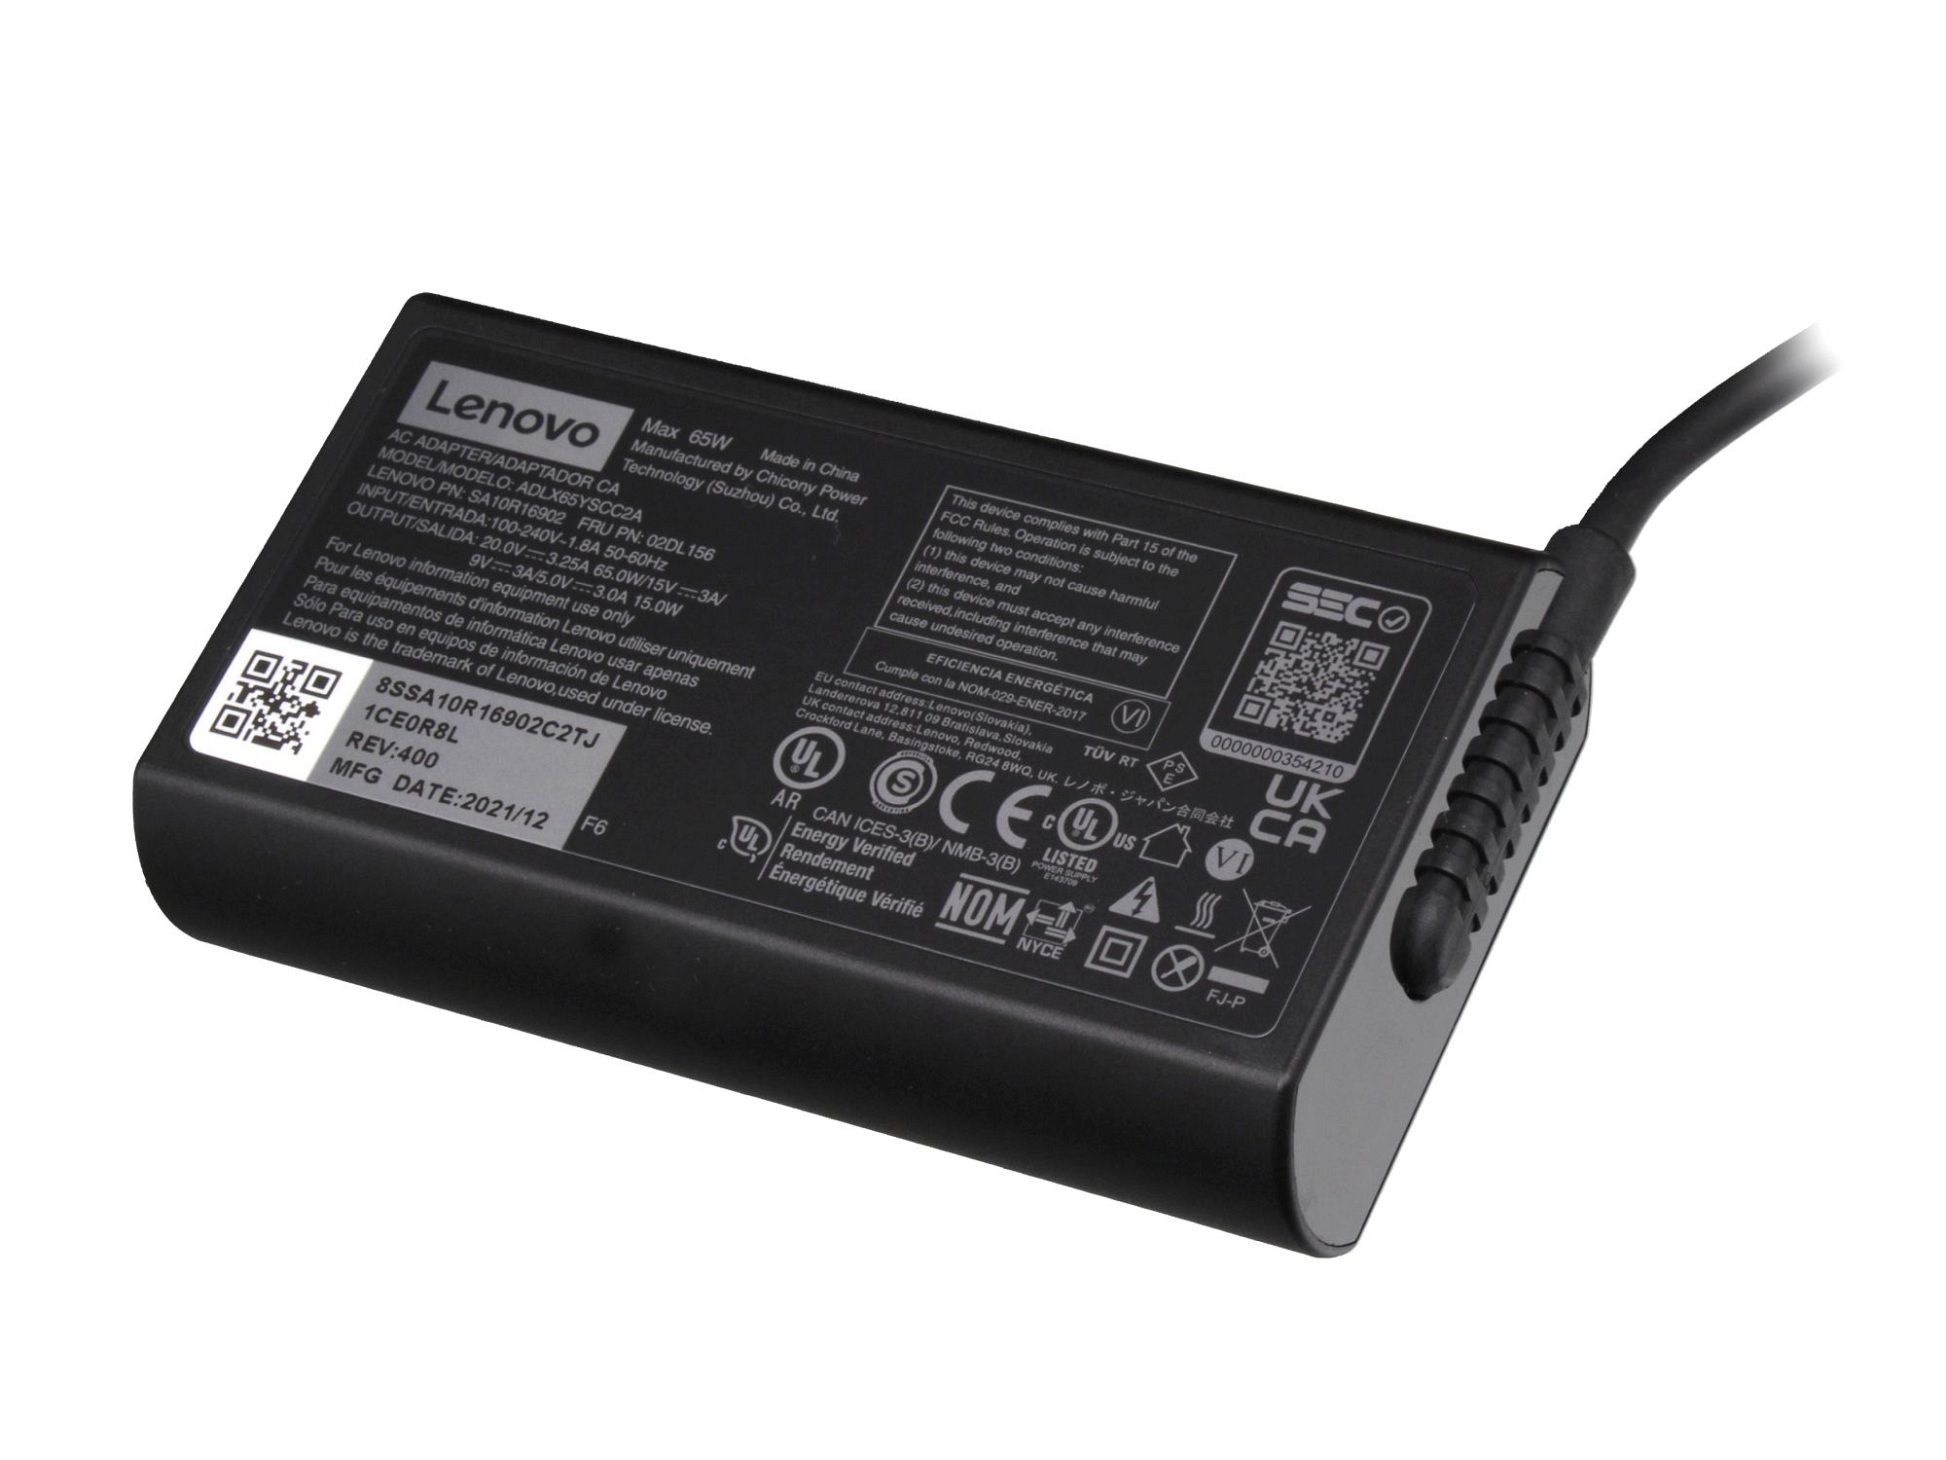 LENOVO ADLX65YSCC3A abgerundetes Original Watt Netzteil USB-C 65